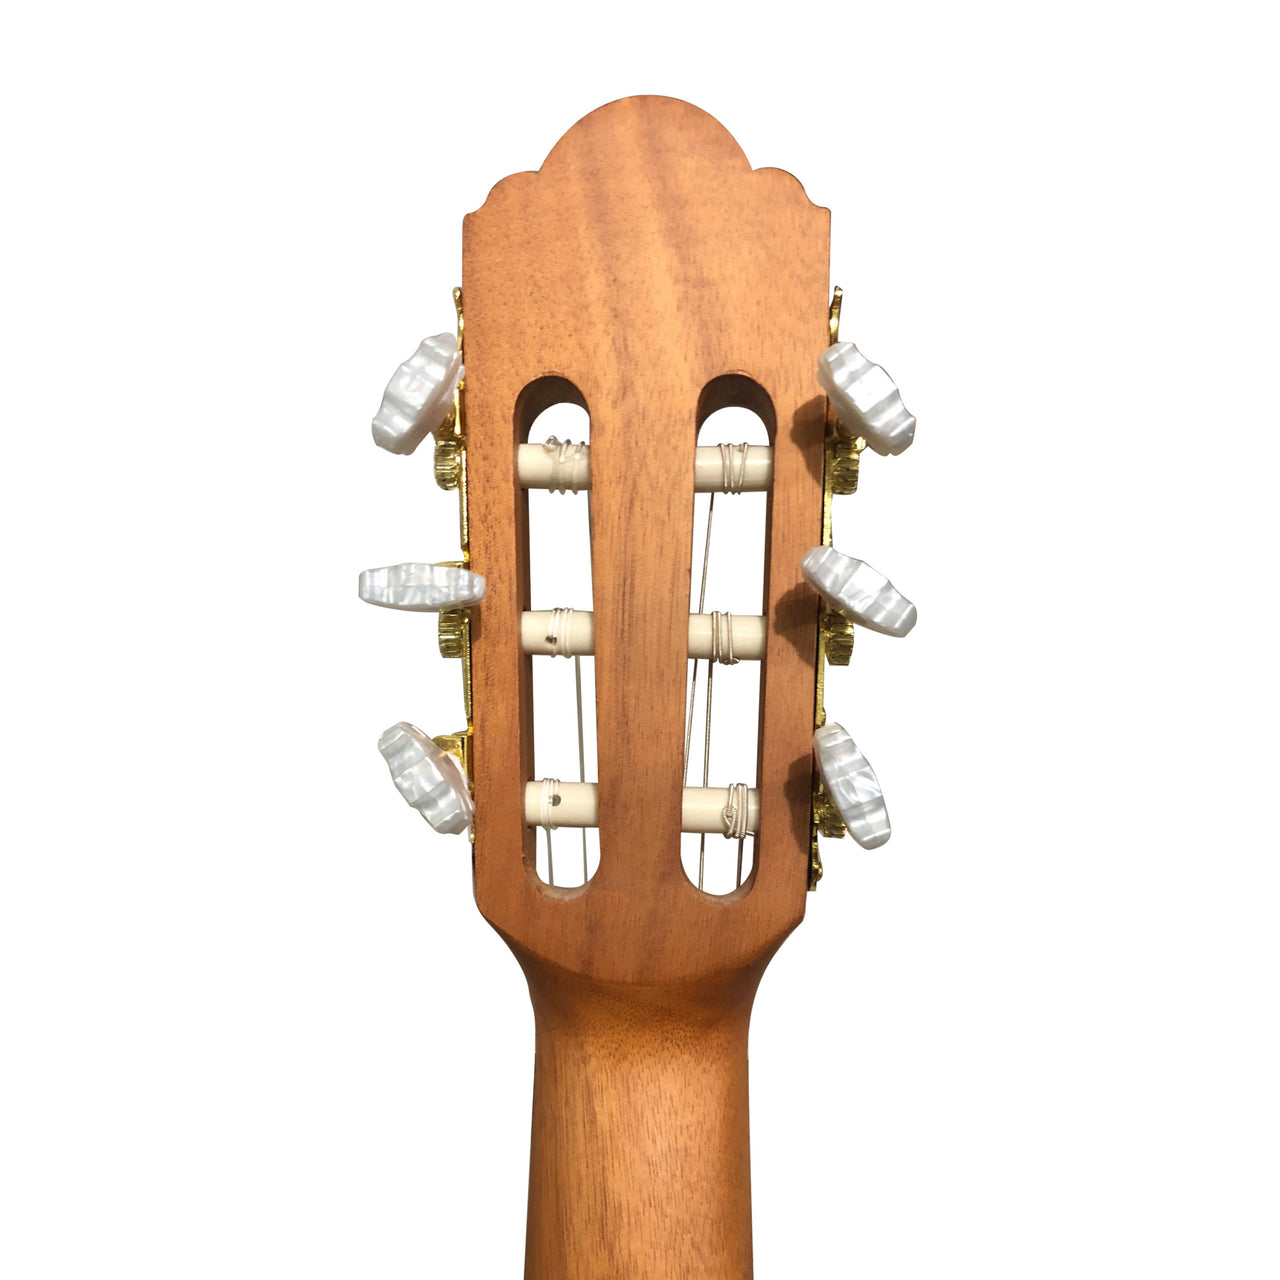 Guitarra Clasica Bamboo Gc-36 Mandala 36 Pulgadas Con Funda